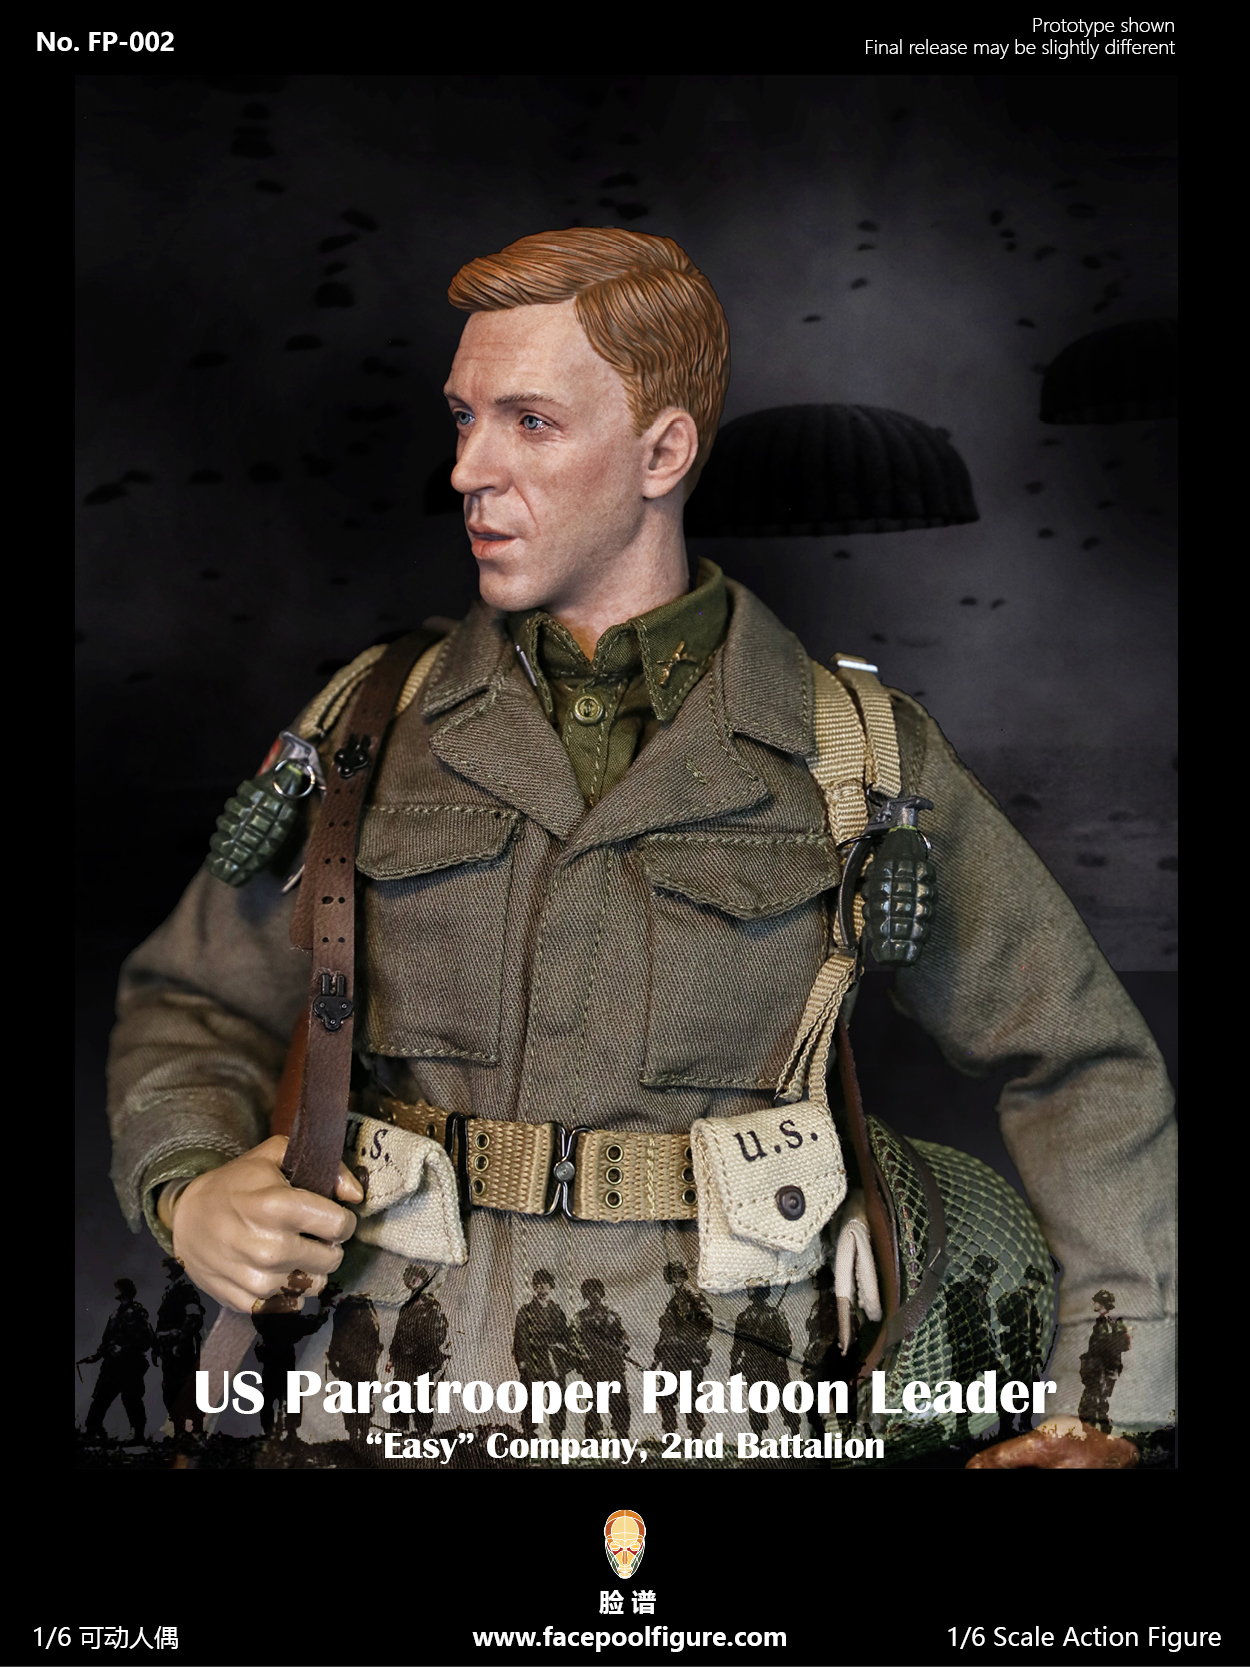 US Paratrooper Platoon Leader - “Easy” Company No. FP-002B Special Edition